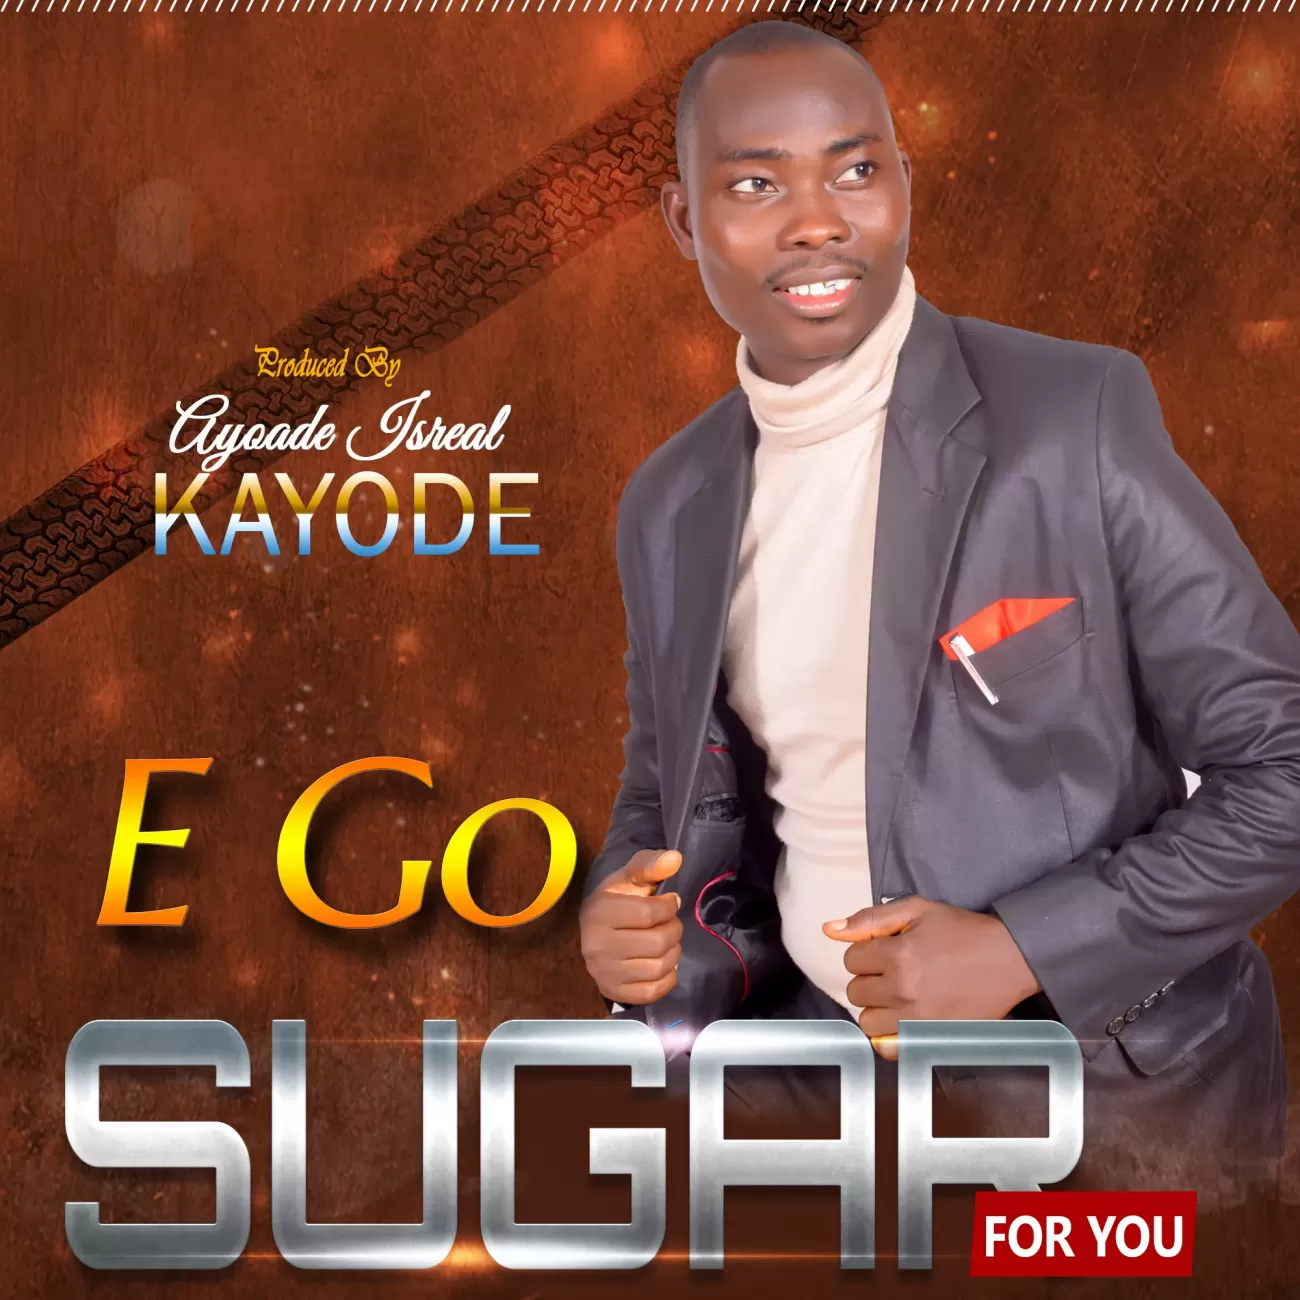 Ayoade Israel Kayode - E go sugar for you